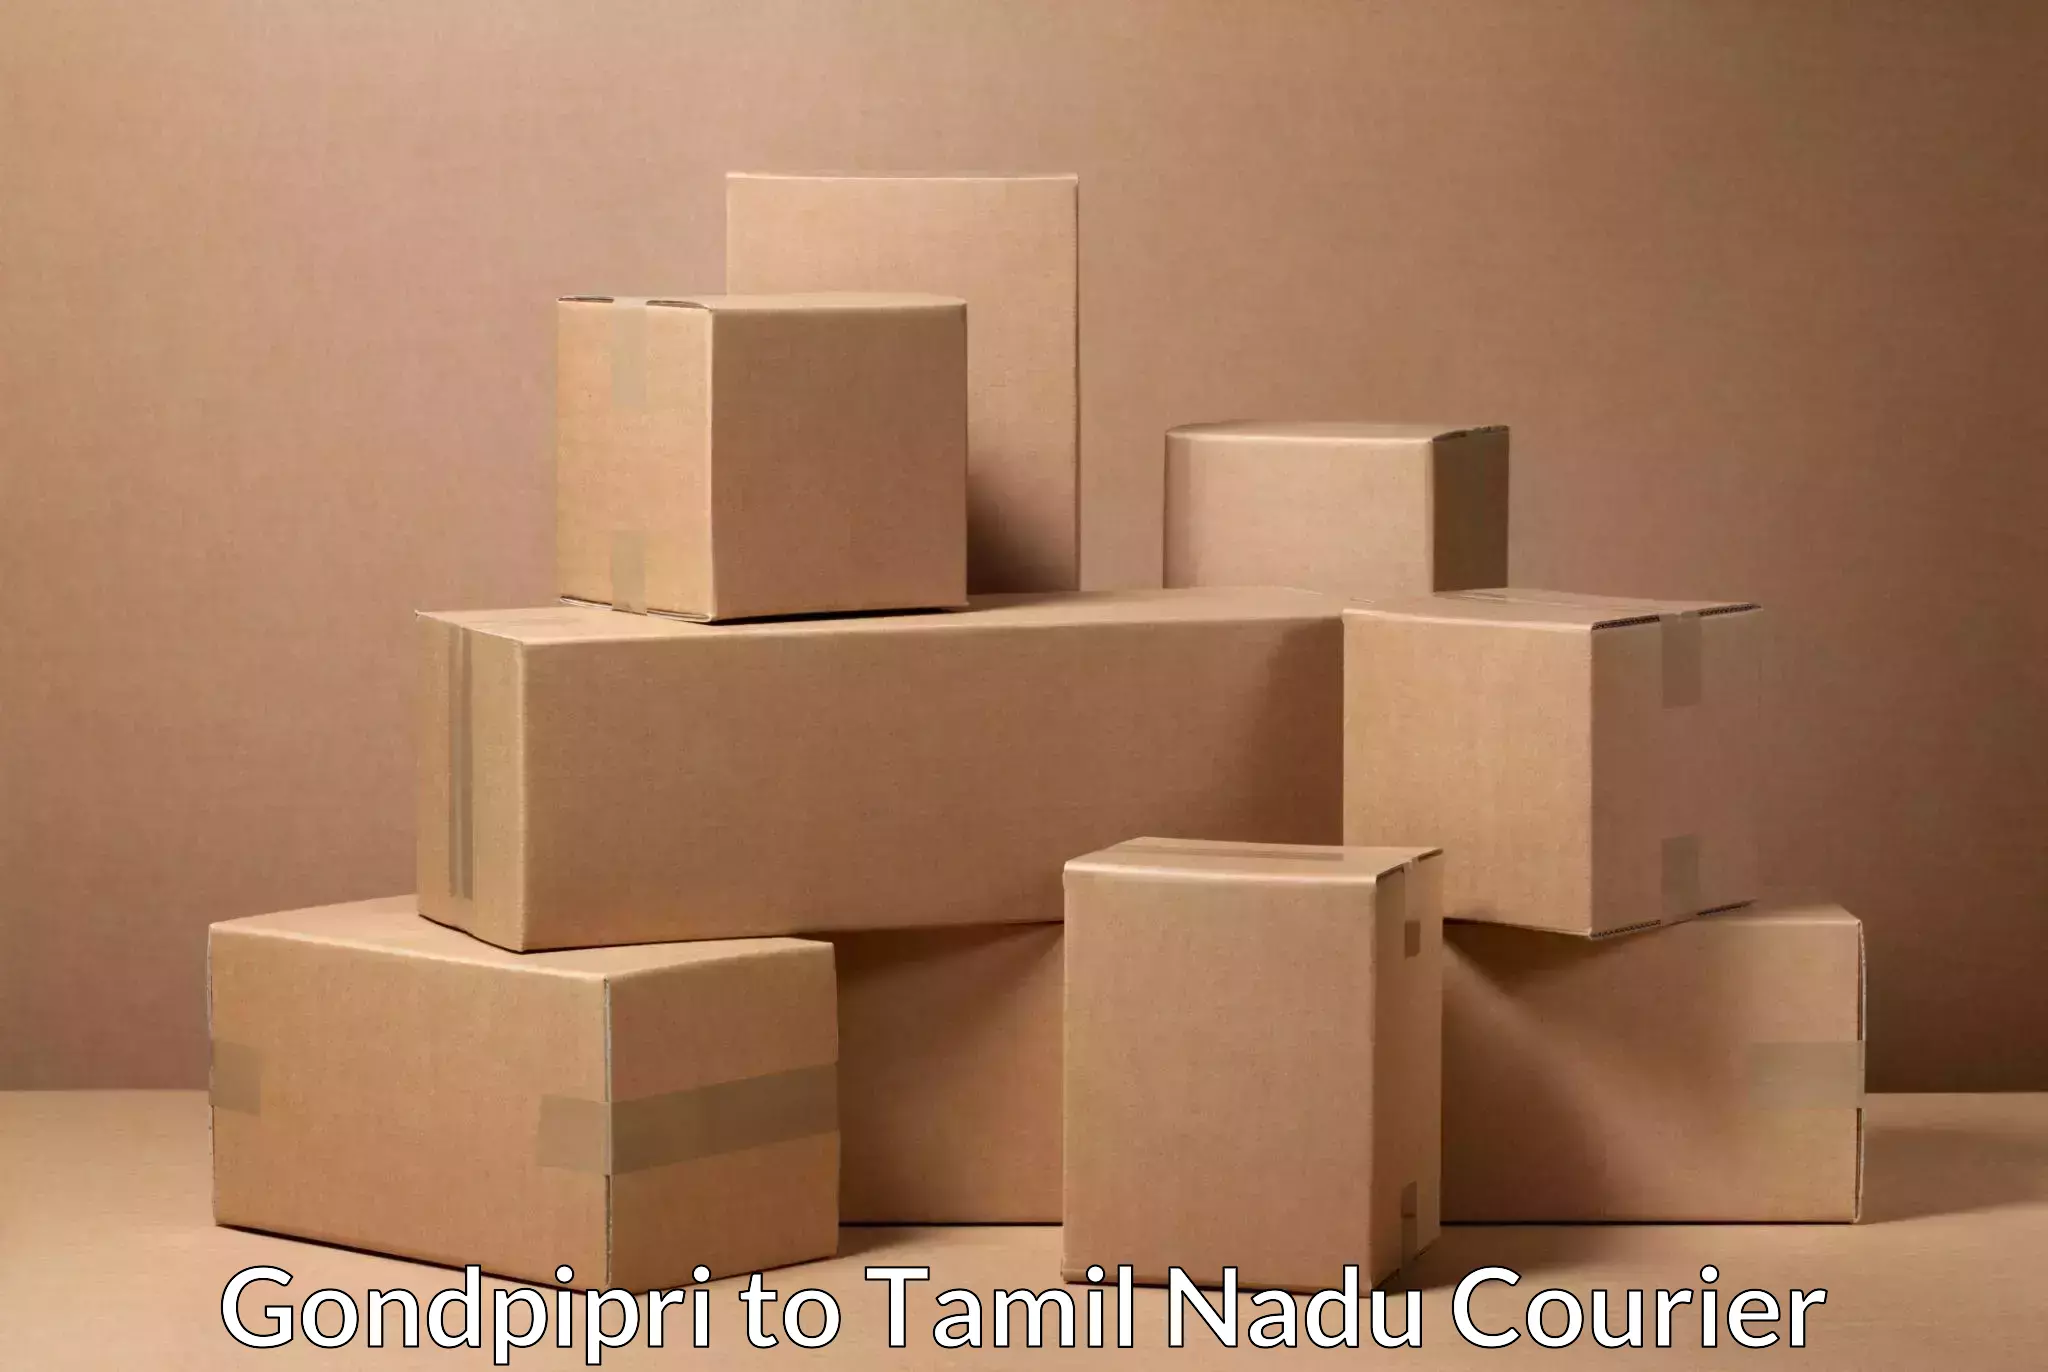 Retail shipping solutions Gondpipri to Rathinasabapathy Puram